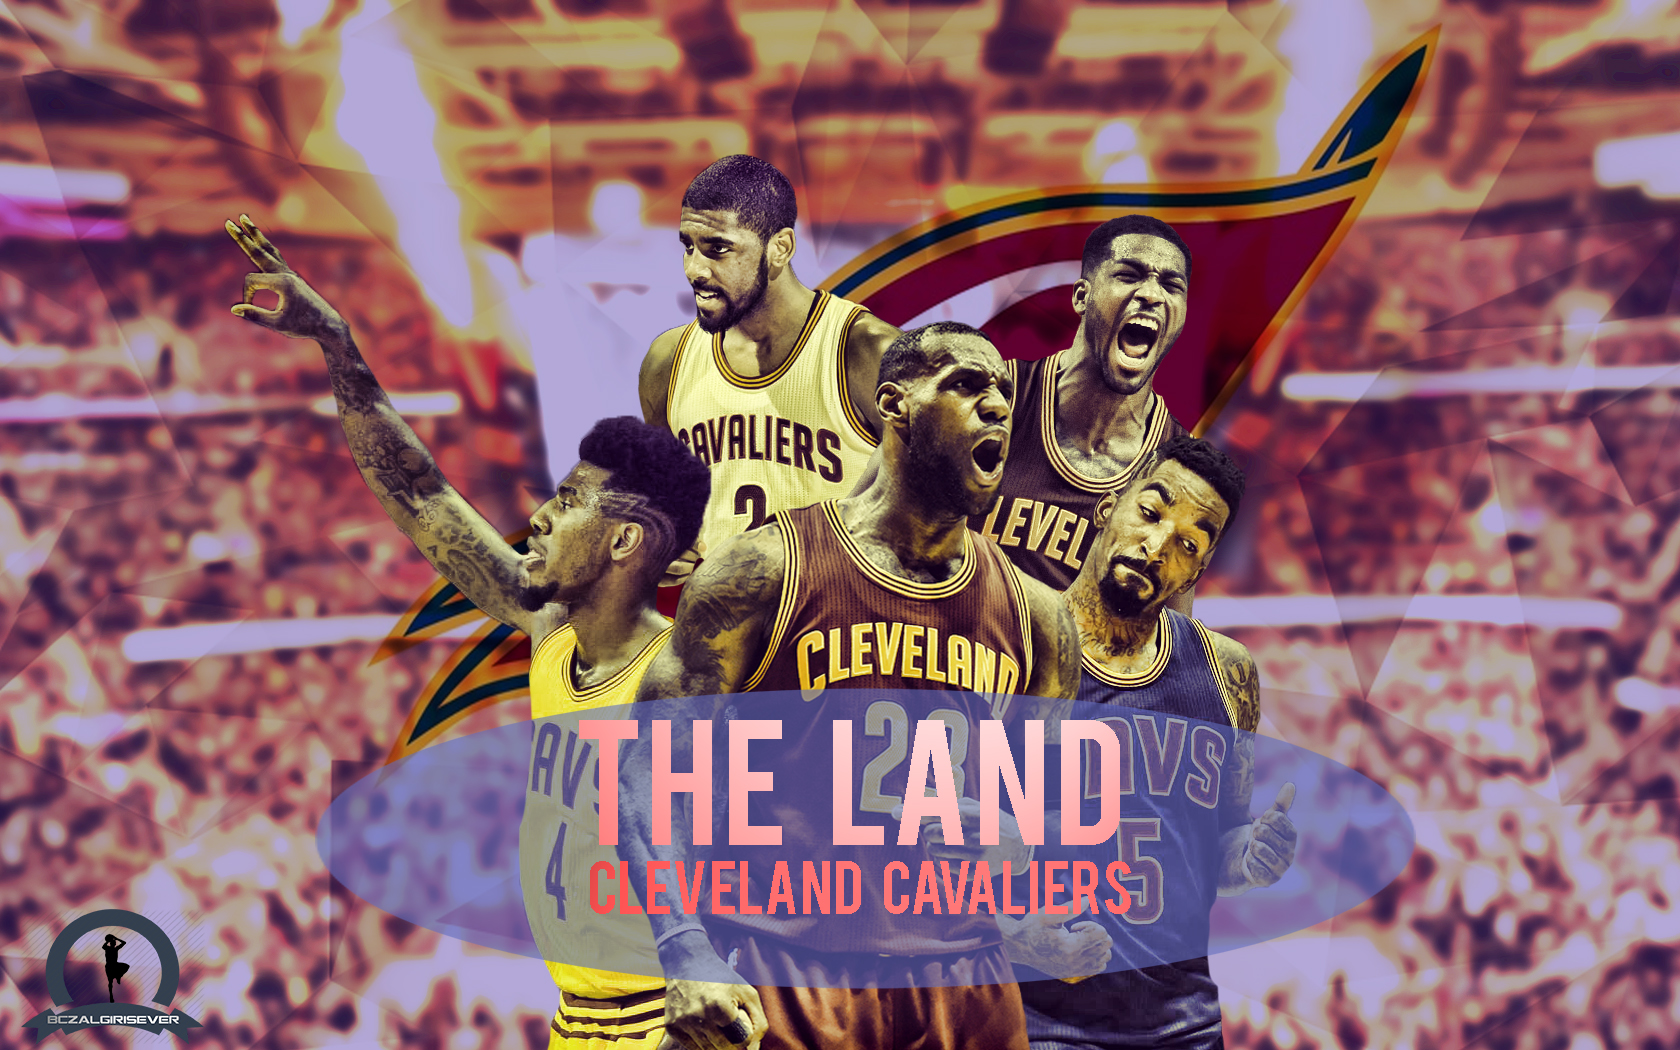 Cleveland Cavaliers Wallpaper By Bczalgirisever